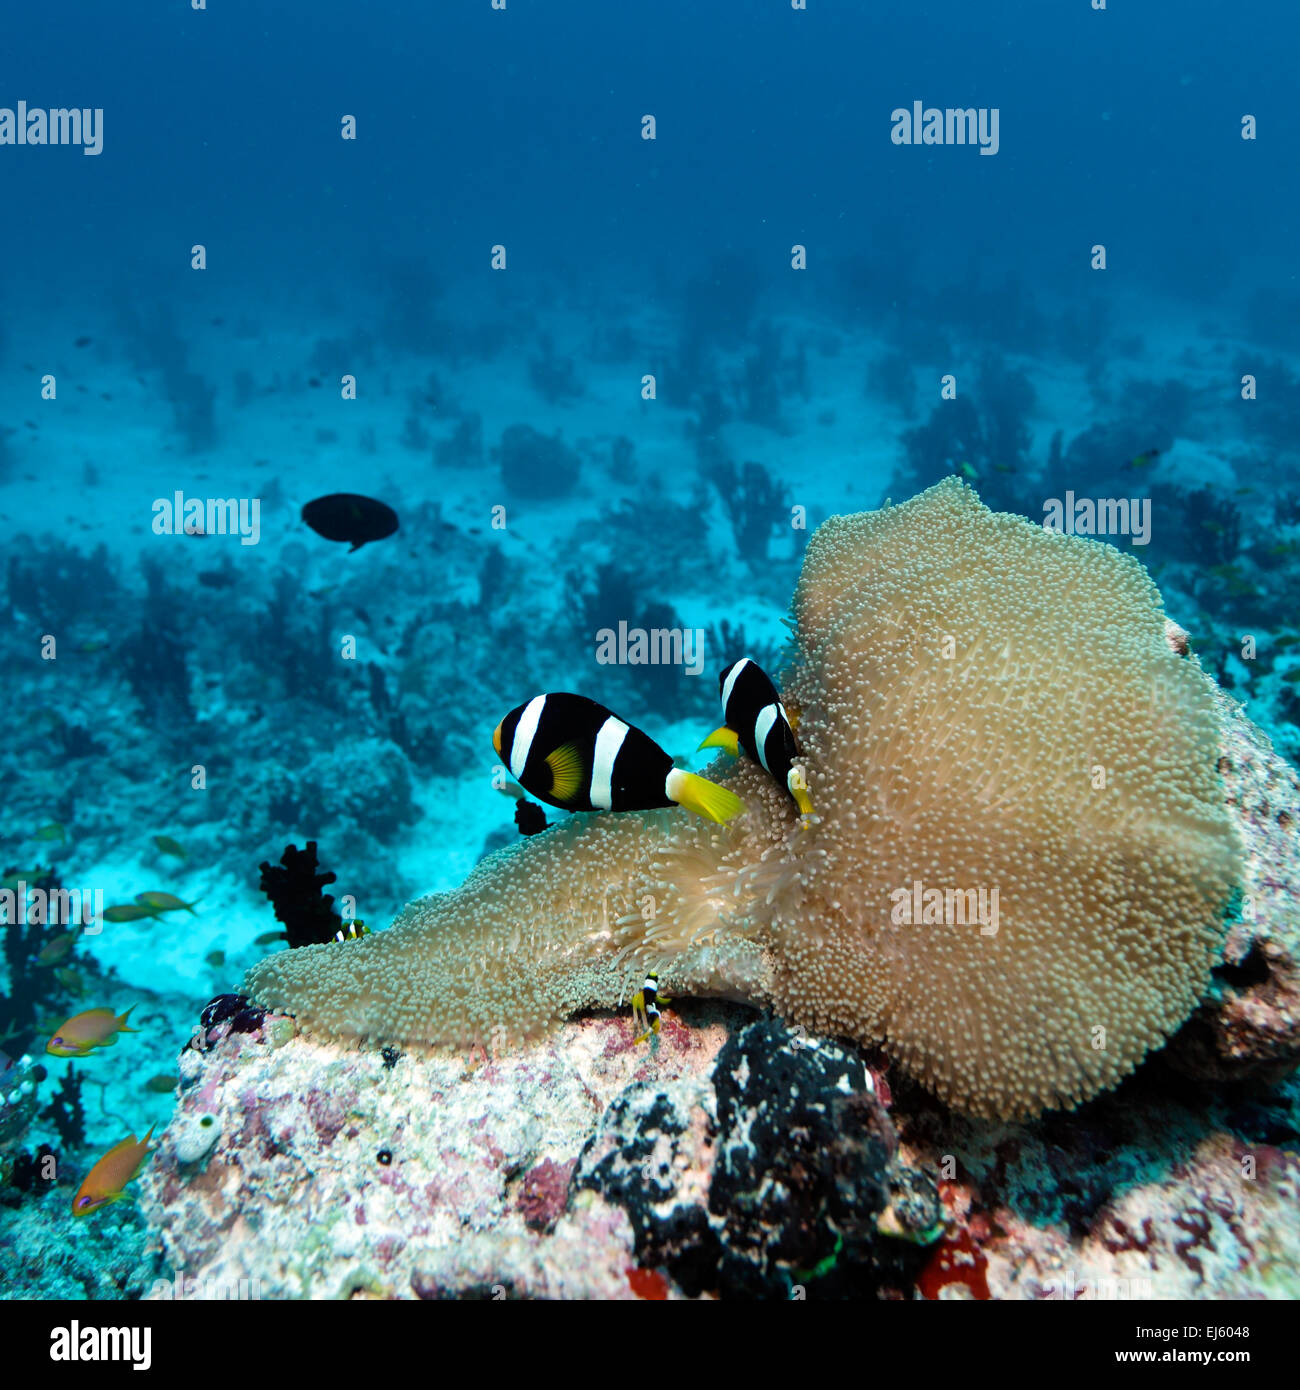 Anemonefish (Amphiprion sebae) in a sea anemone (Heteractis magnifica), Maldives Stock Photo